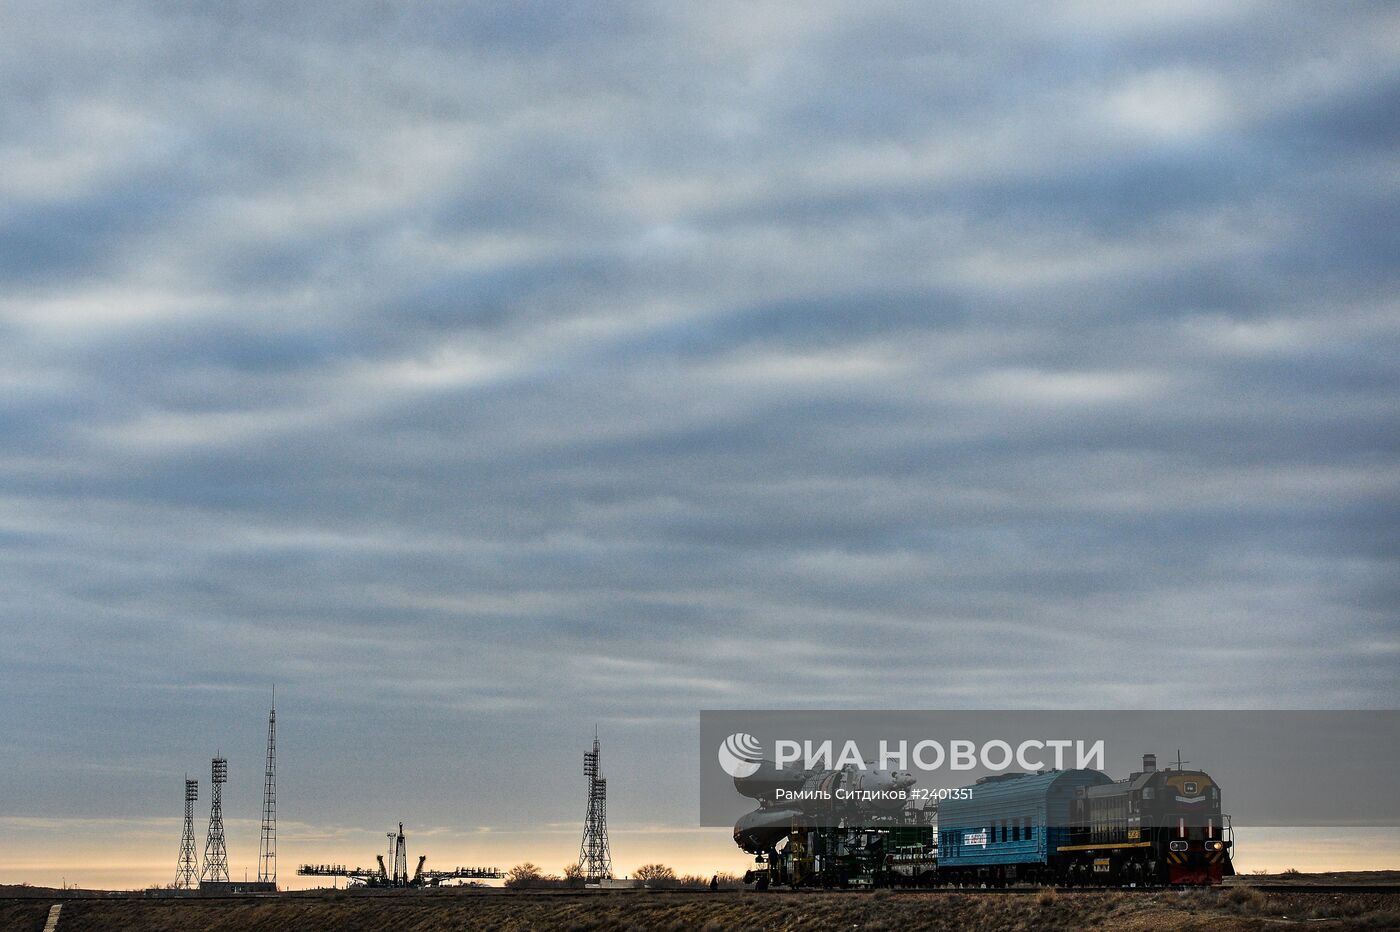 Вывоз и установка PH "Союз-ФГ" с ТПК "Союз ТМА-12М" на космодроме "Байконур"